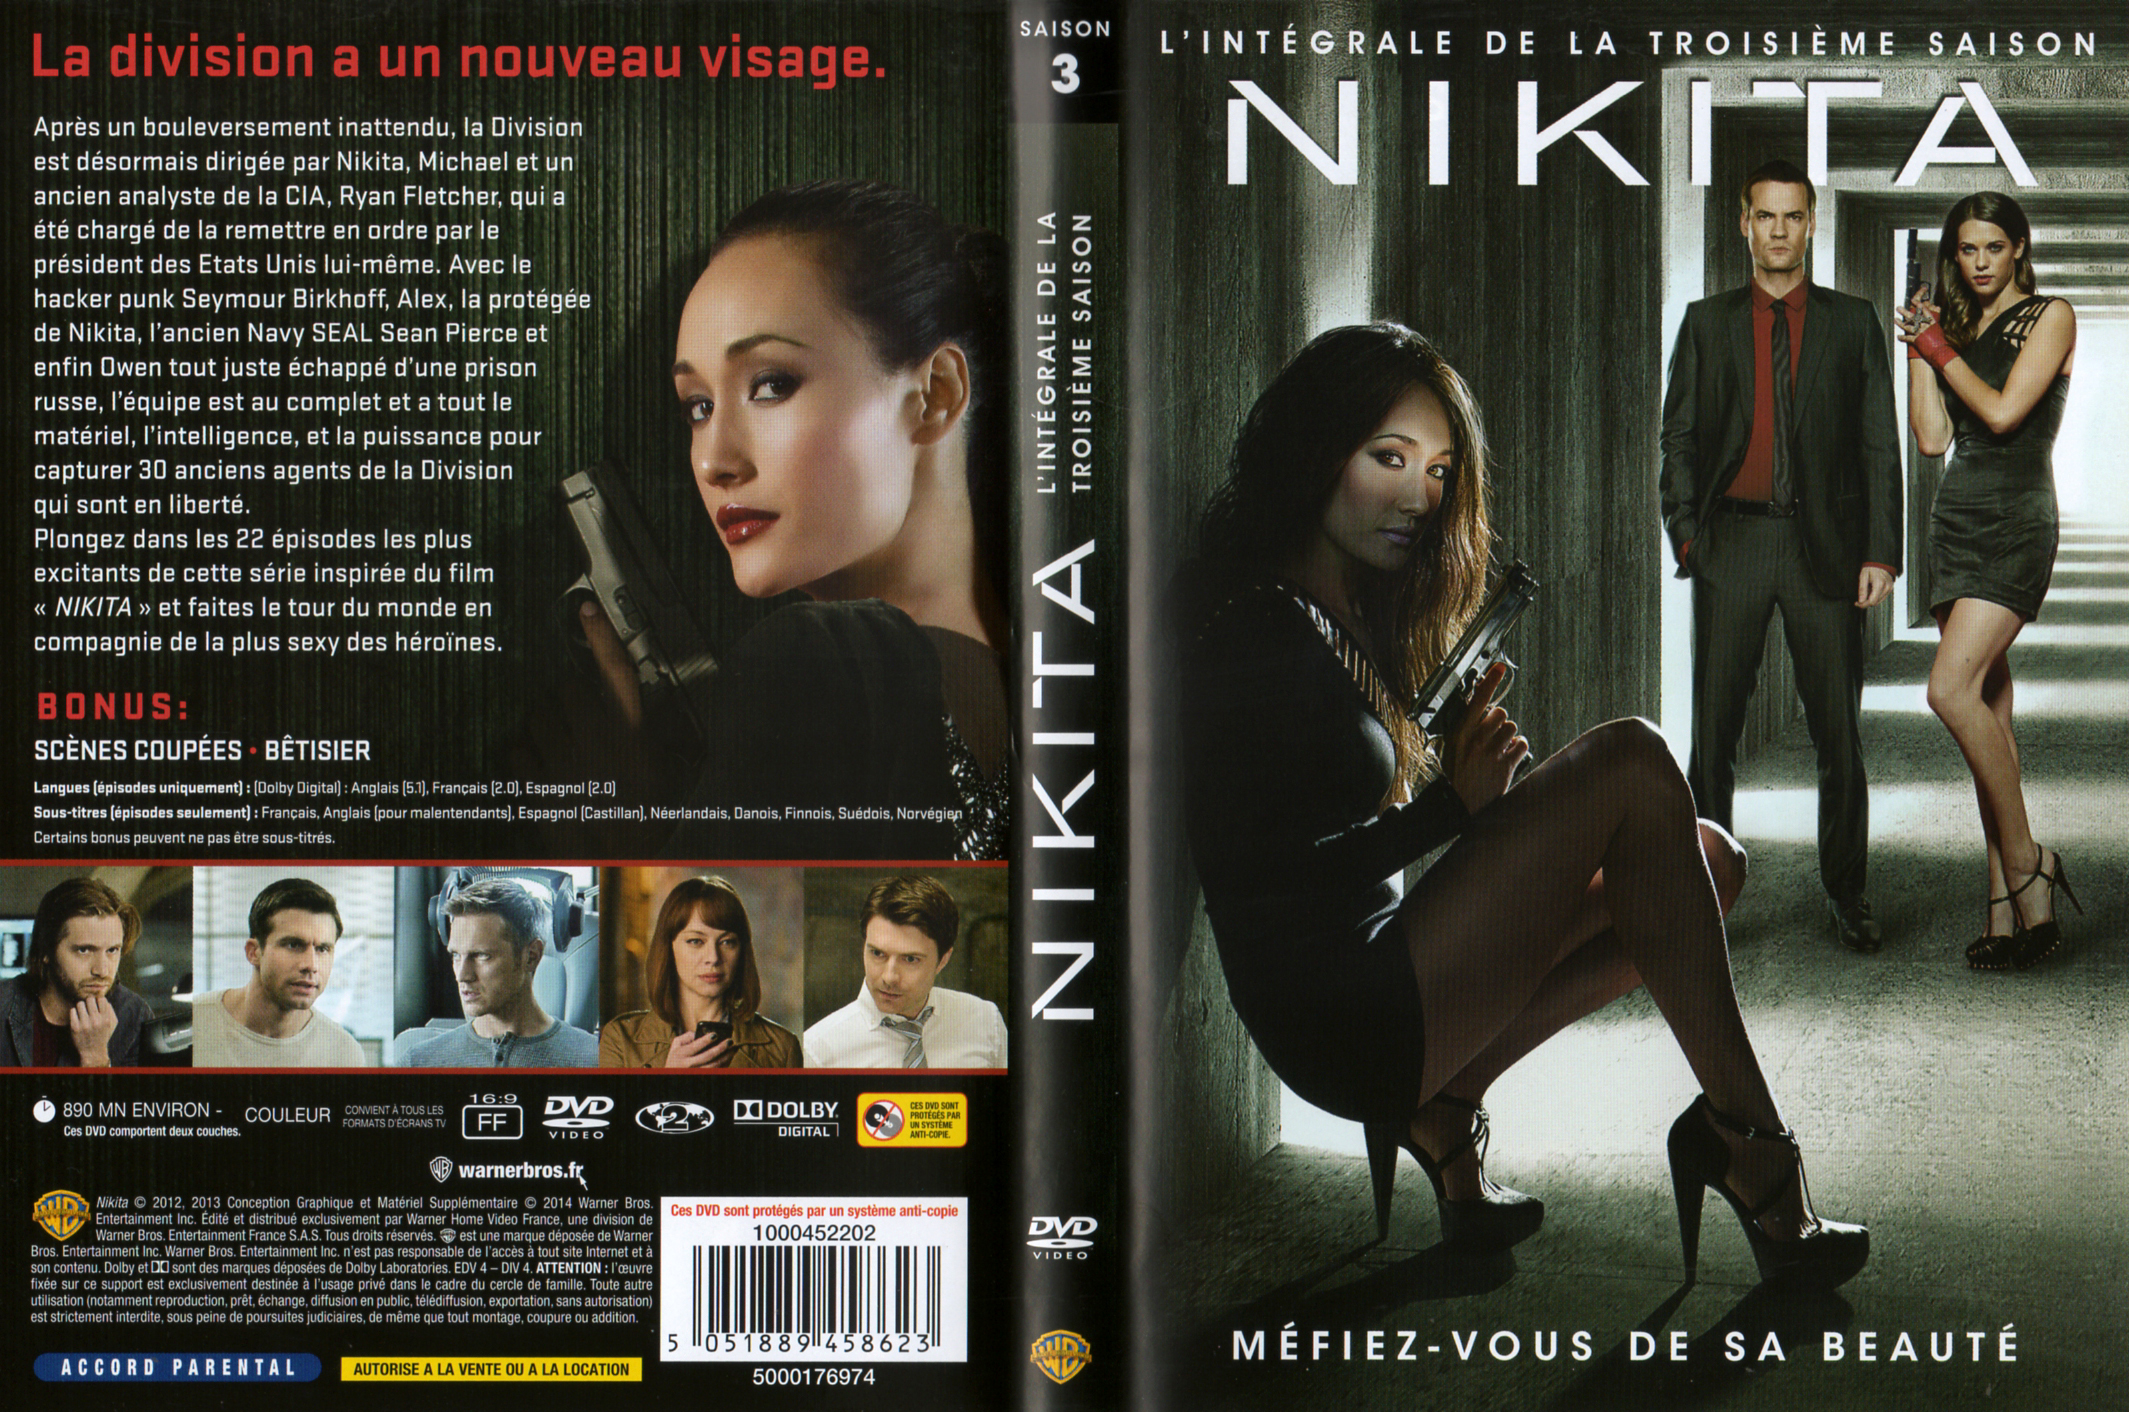 Jaquette DVD Nikita saison 3